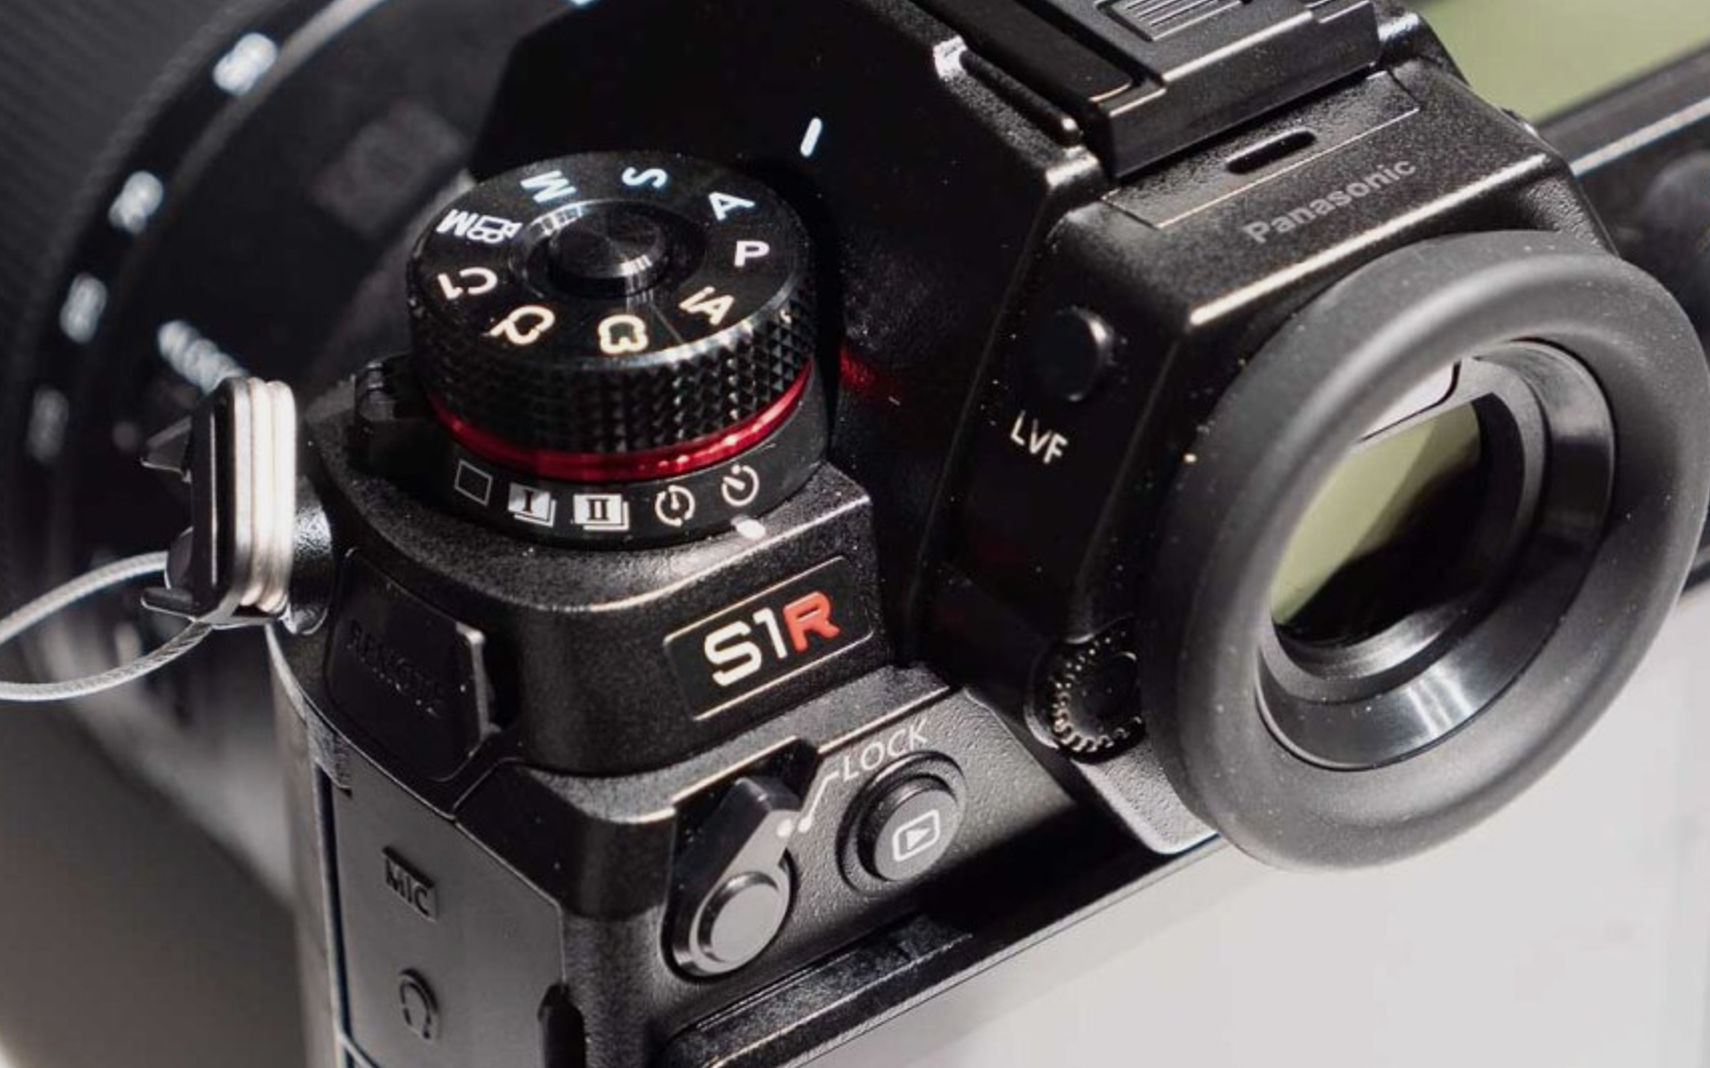 Panasonic Lumix S1 & S1R Cameras